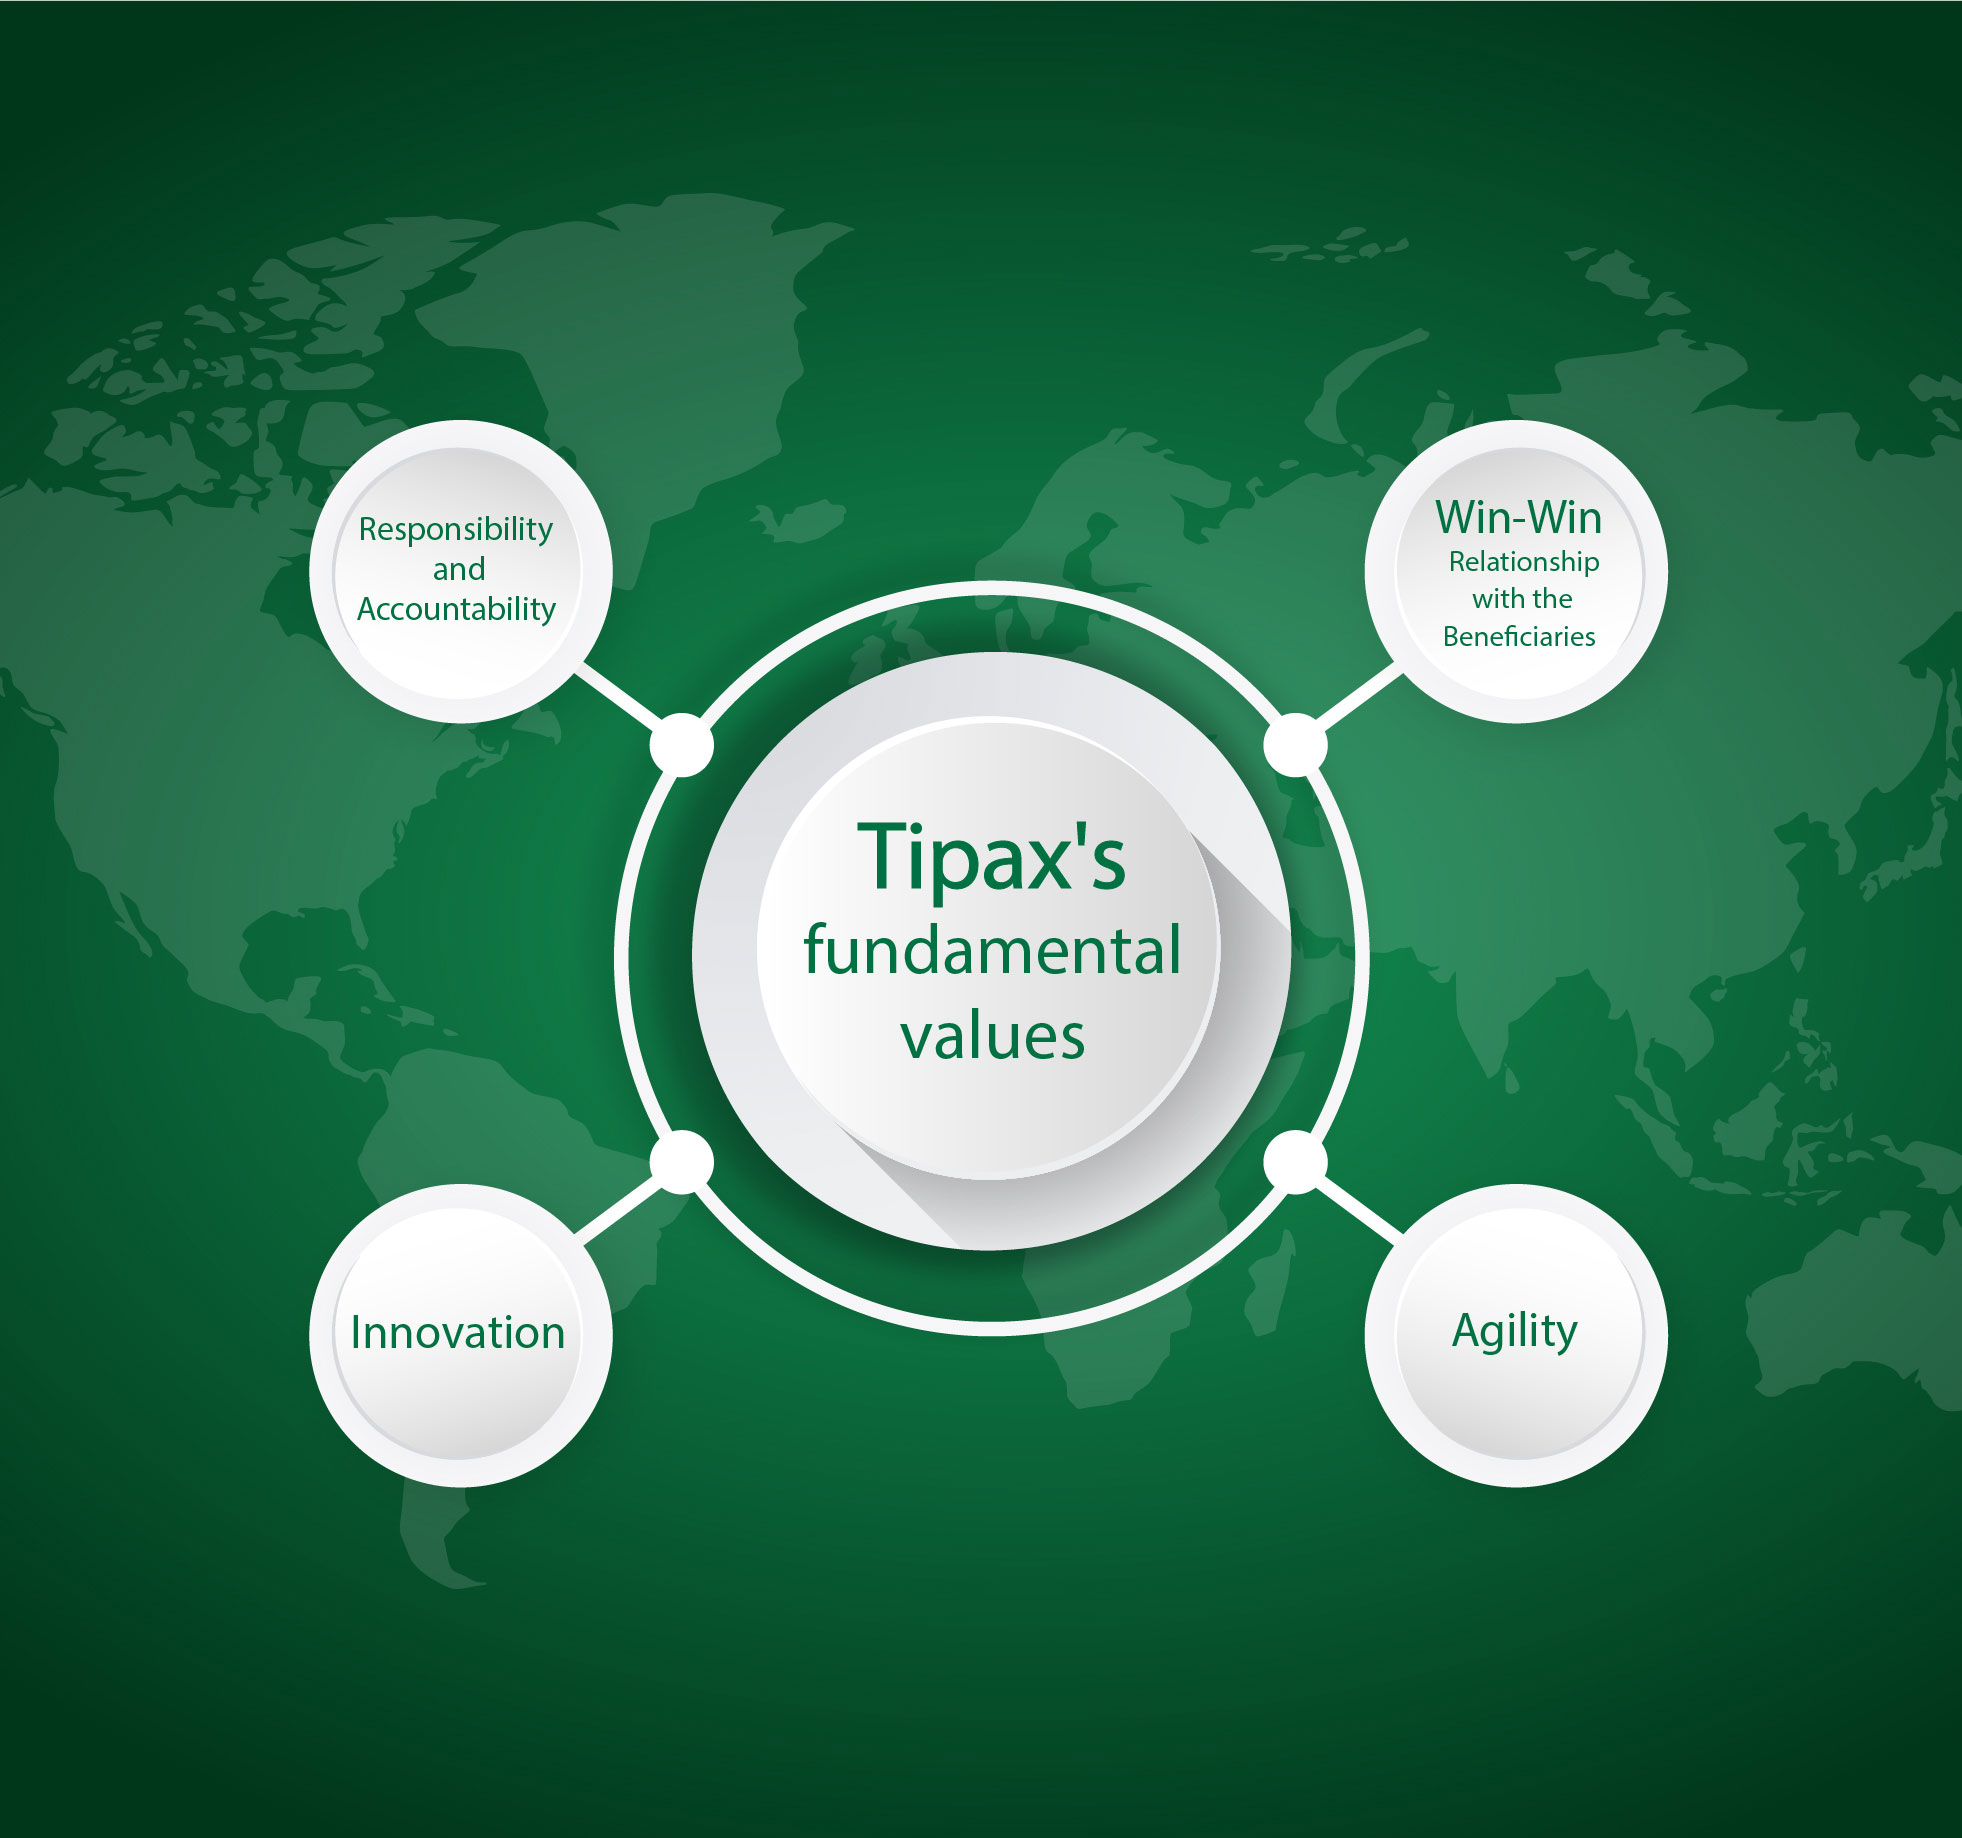 Tipax's fundamental values